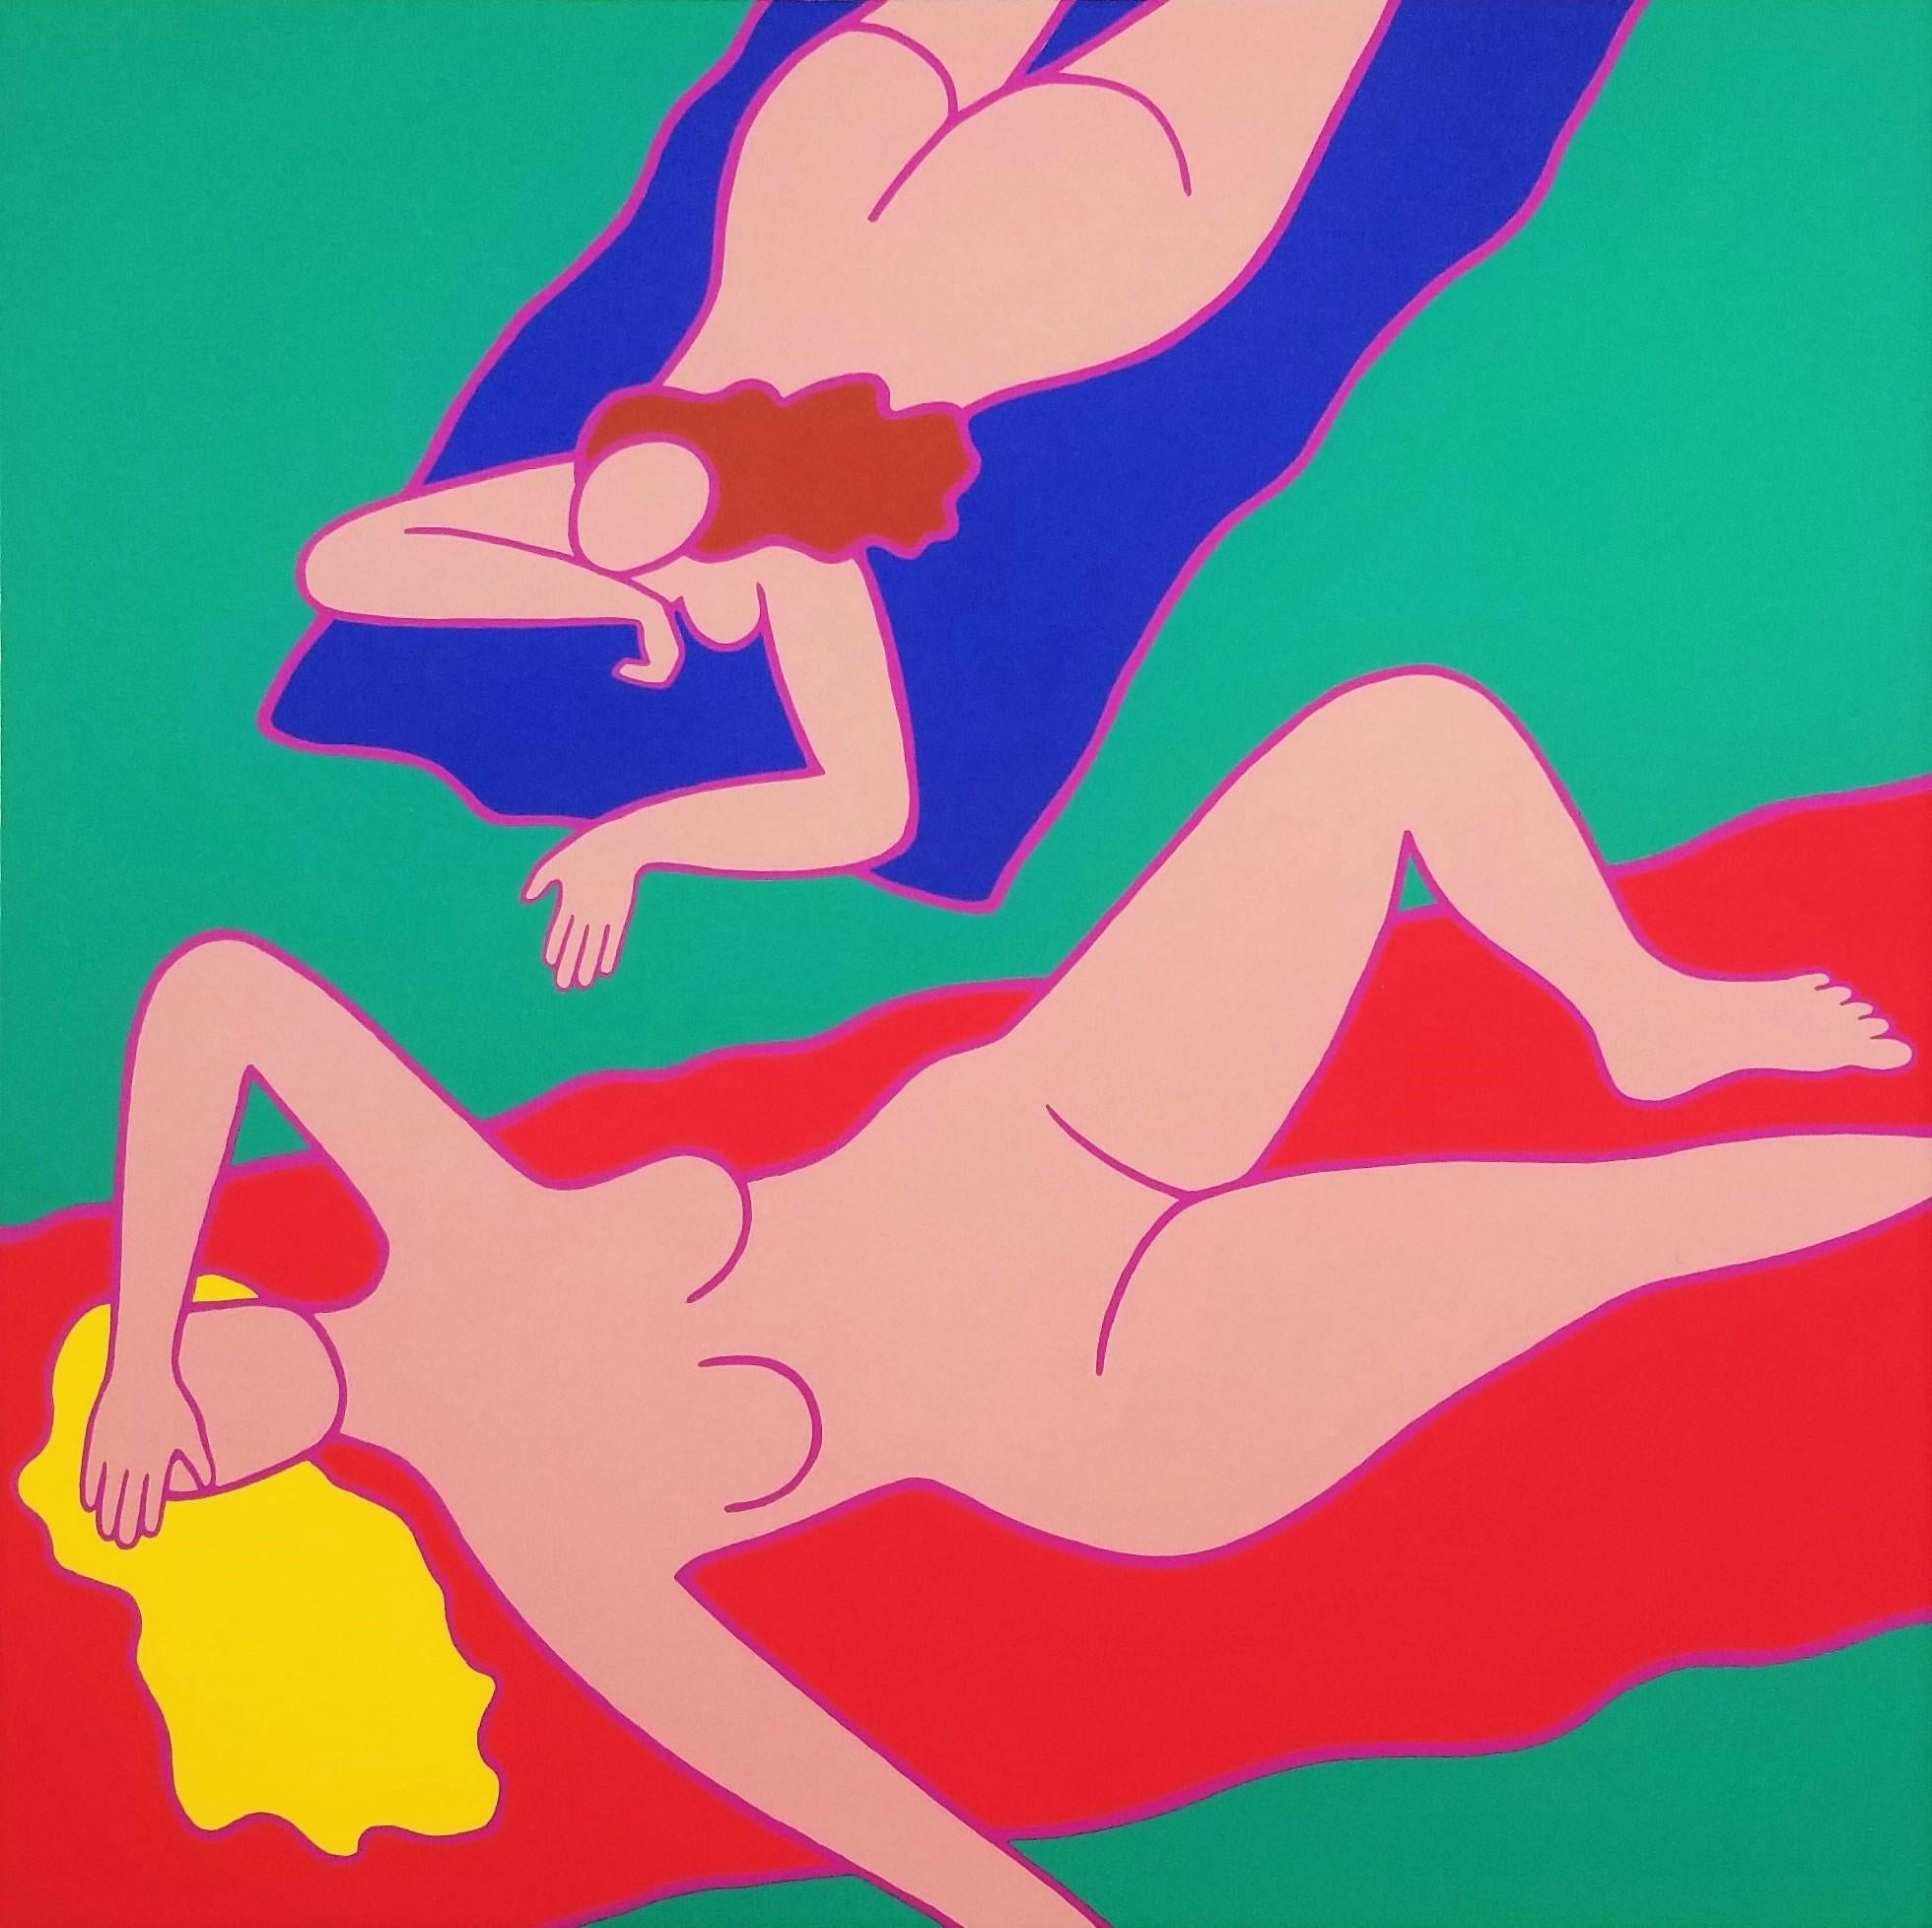 Dan May Nude Print - Nudes on Towels /// Contemporary Pop Art Figurative Swimming Pool Screenprint